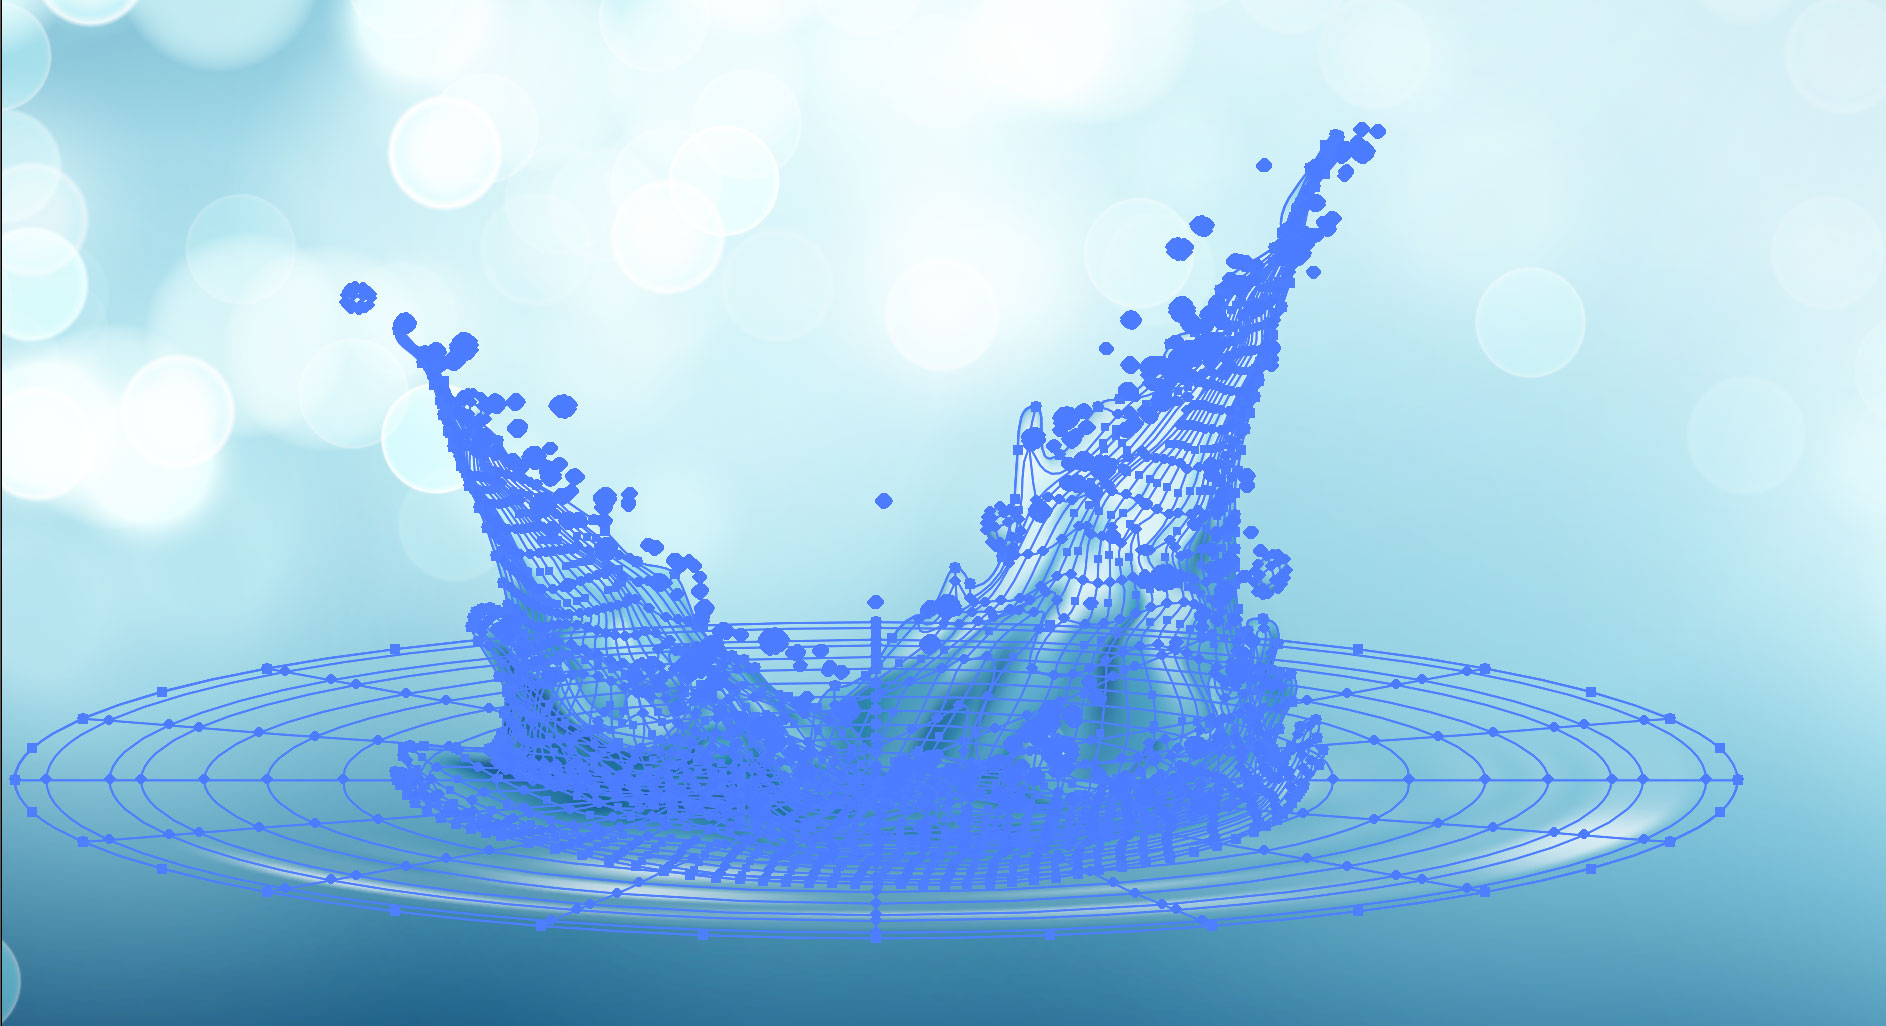 Photo-realistic Water Splash ai vector